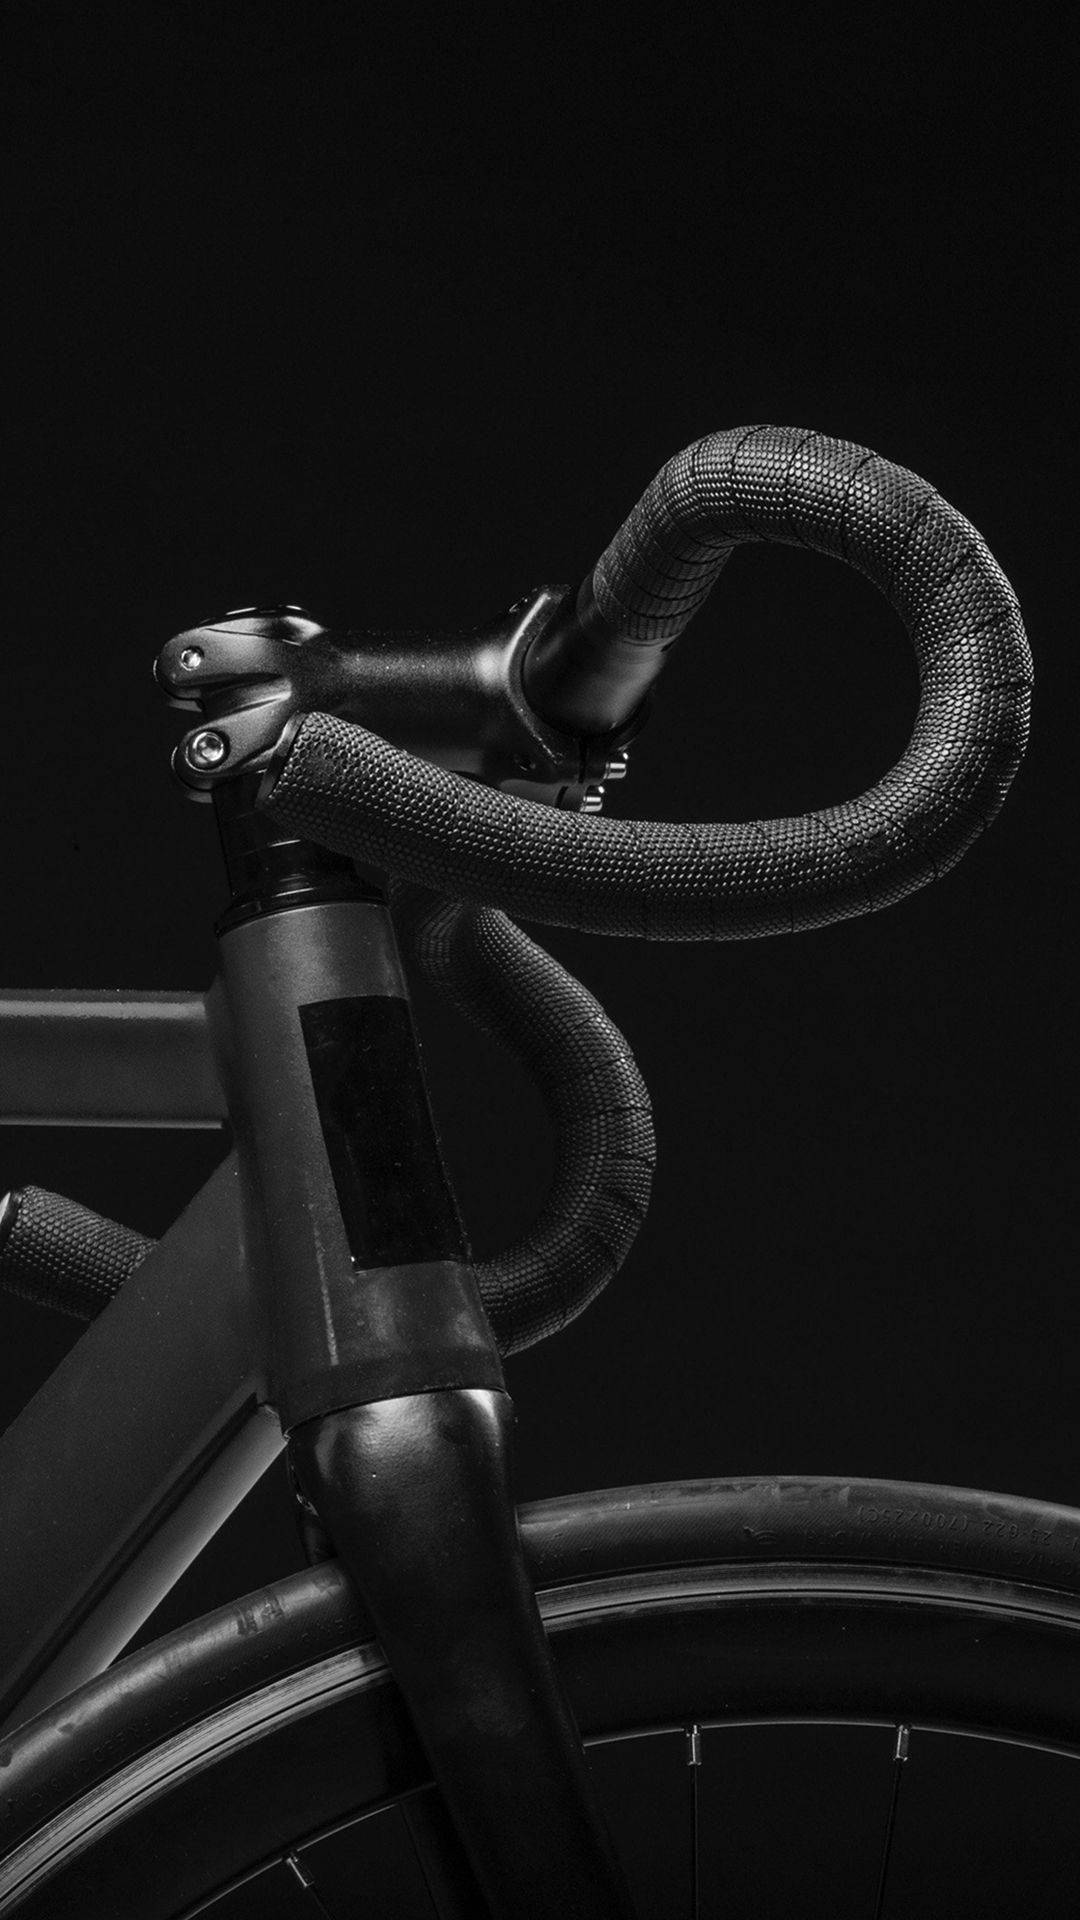 Black Aesthetic Close Up Shot Bicycle Iphone Wallpaper